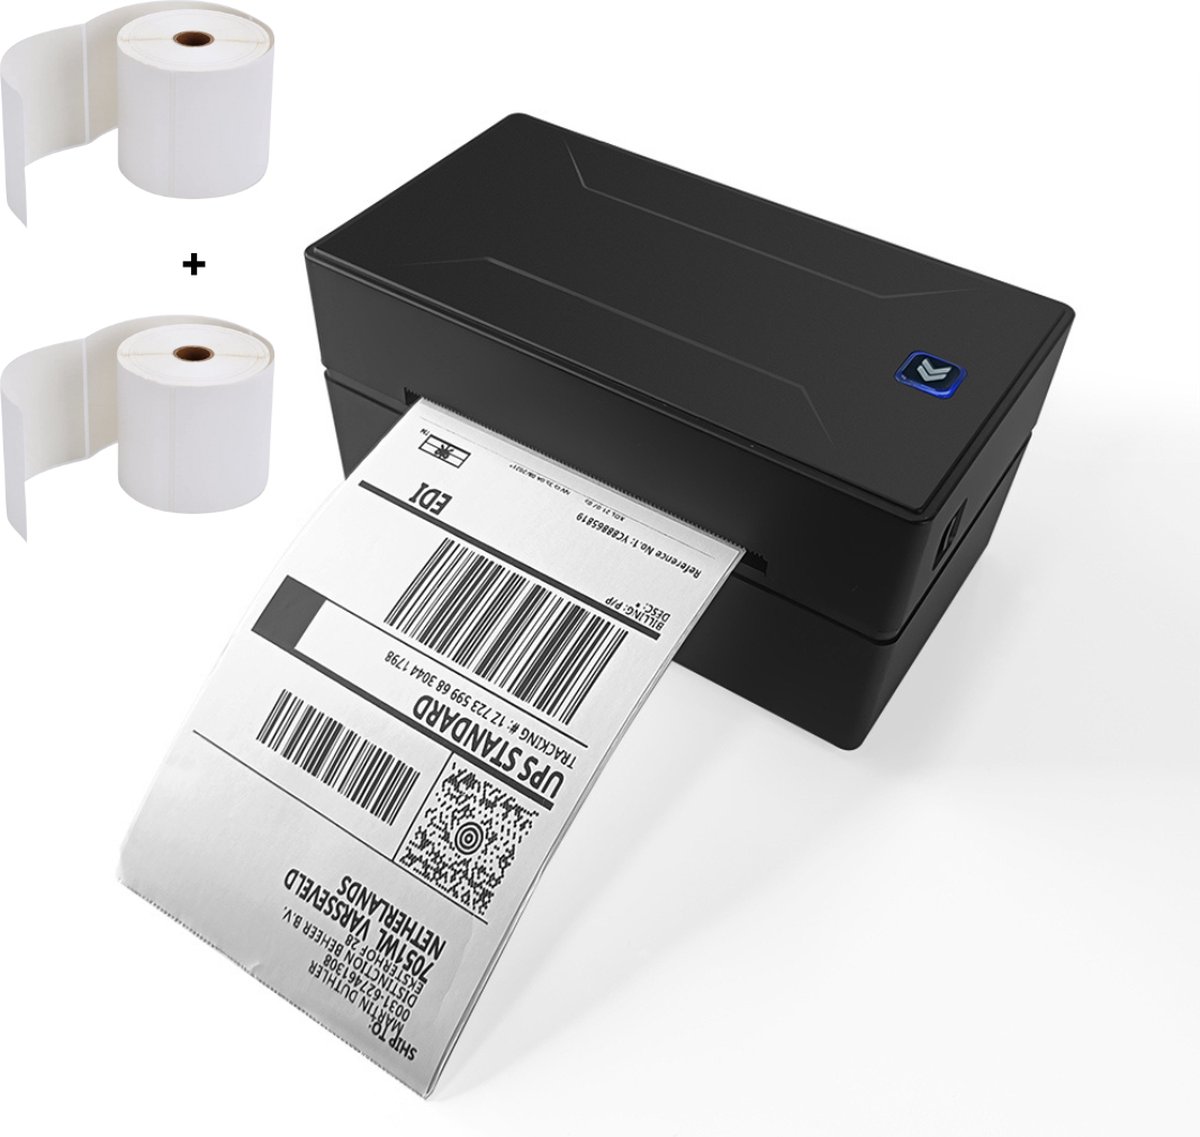 Label Printer + 2 label rollen (500 pcs per rol) - Bluetooth - USB verbinding - Bluetooth Thermal Label Printer - Snel Printen - Thuisgebruik - Kantoor Printer - 100 mm x 150 mm Labels - Thermal Label Printer